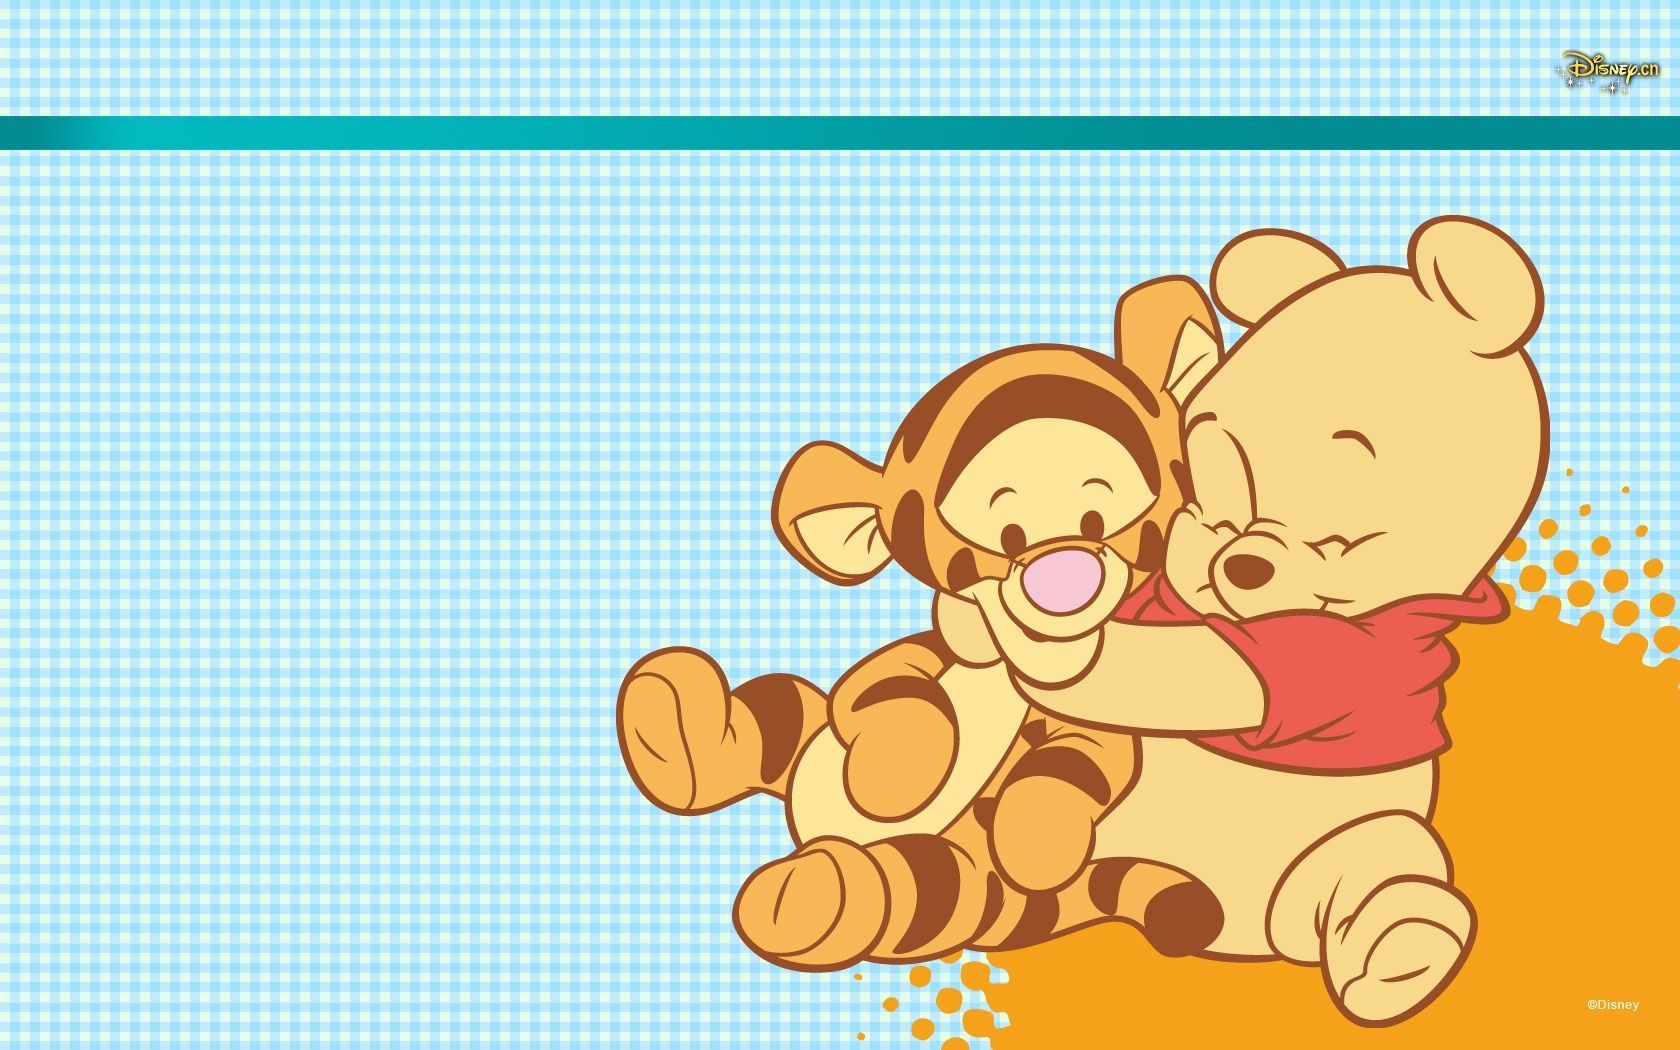 Winnie the Pooh Desktop Wallpaper Free Winnie the Pooh